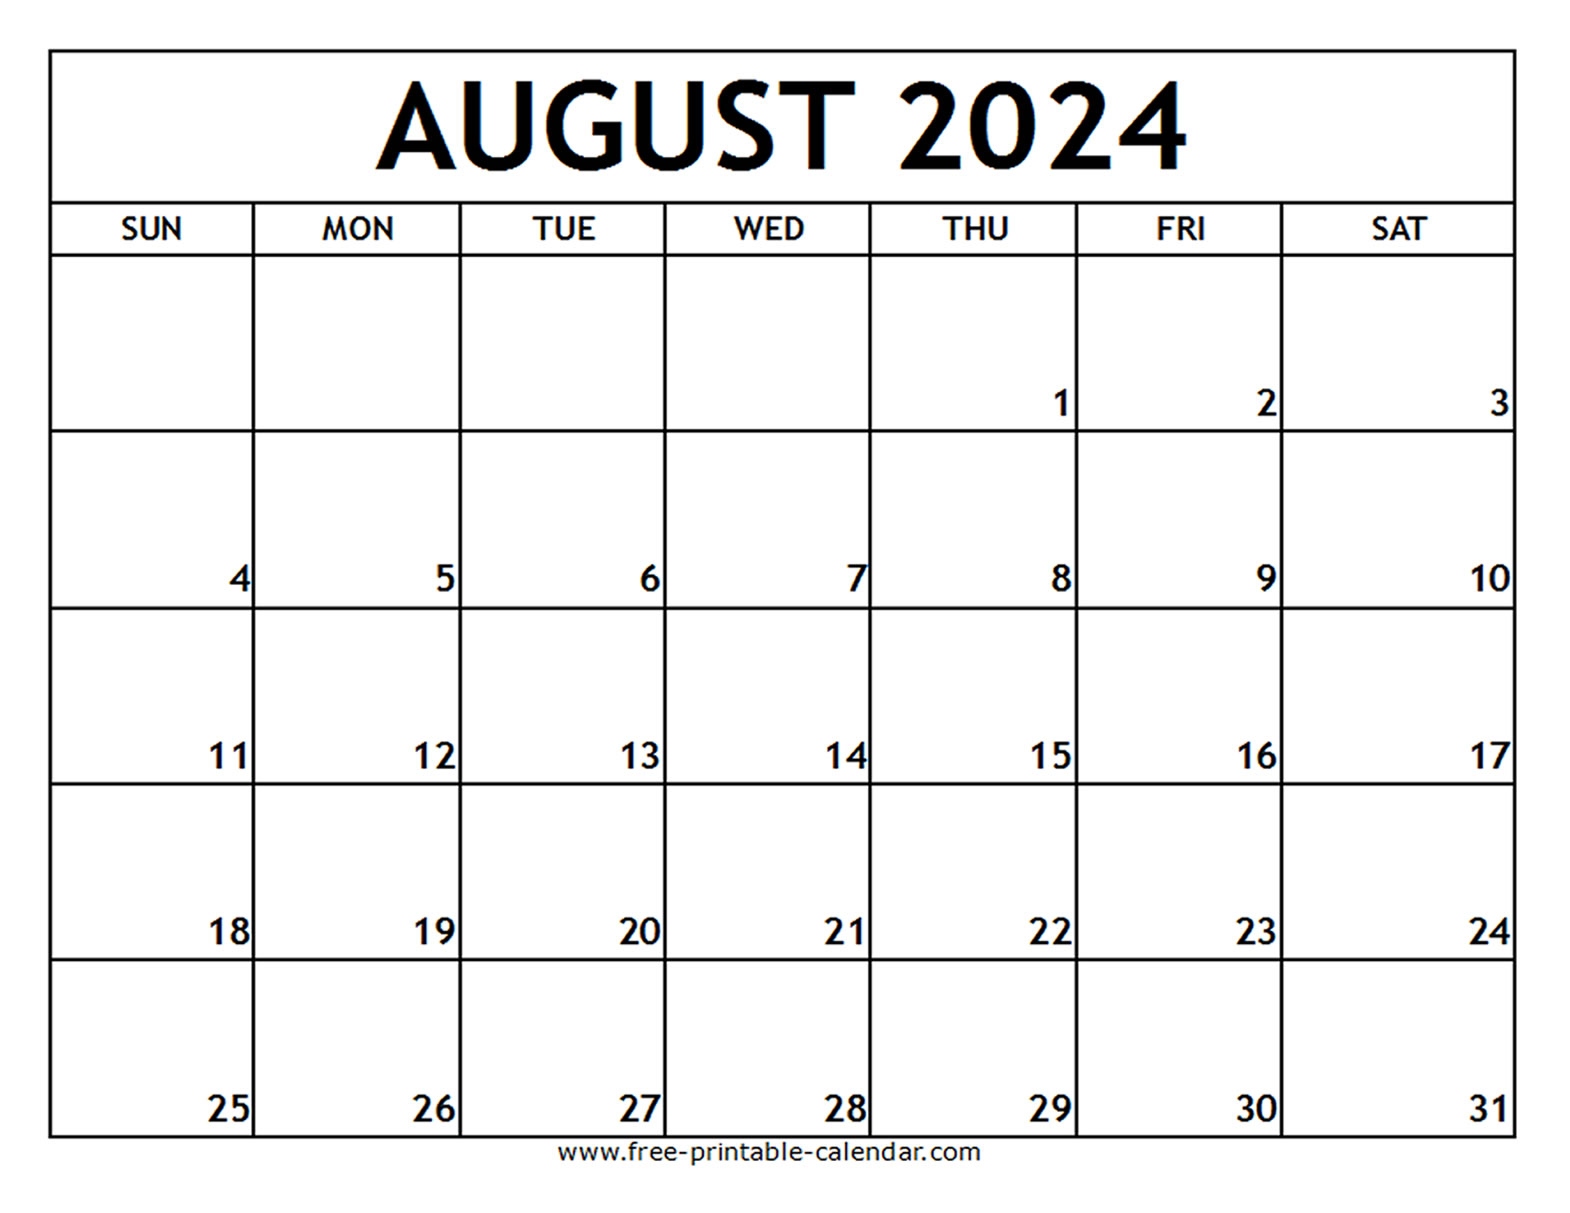 August 2024 Printable Calendar - Free-Printable-Calendar for Free Printable August 2024 Calendar With Lines